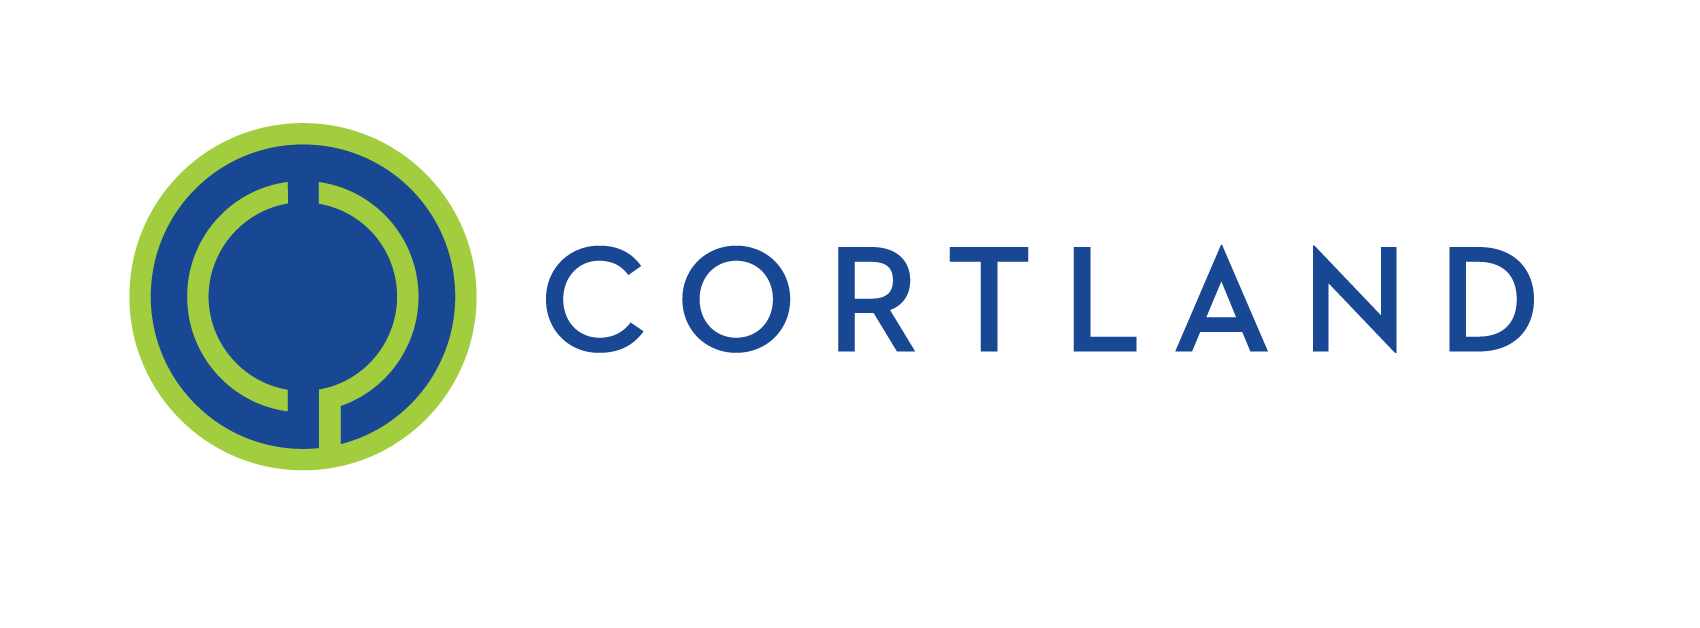 Cortland Logo - Cortland logo